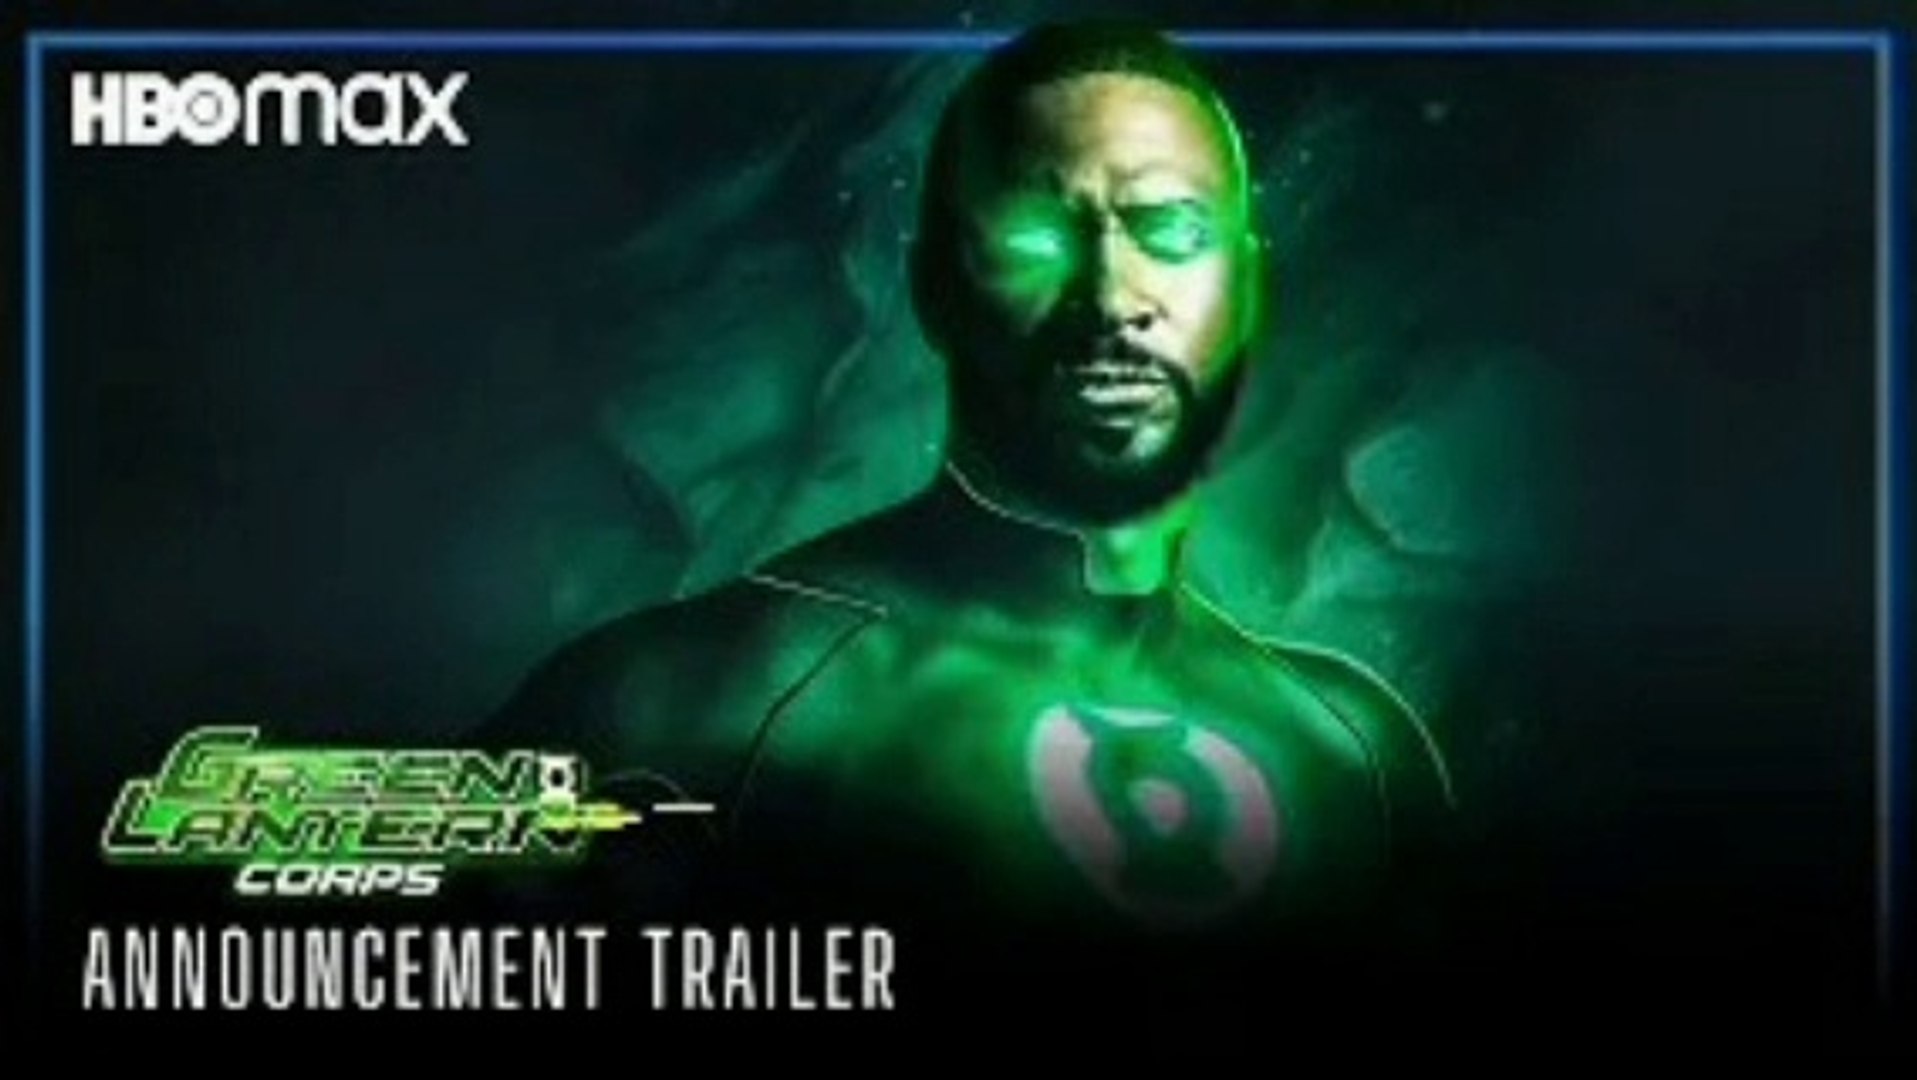 Green Lantern Corps (2021) Trailer | HBO Max